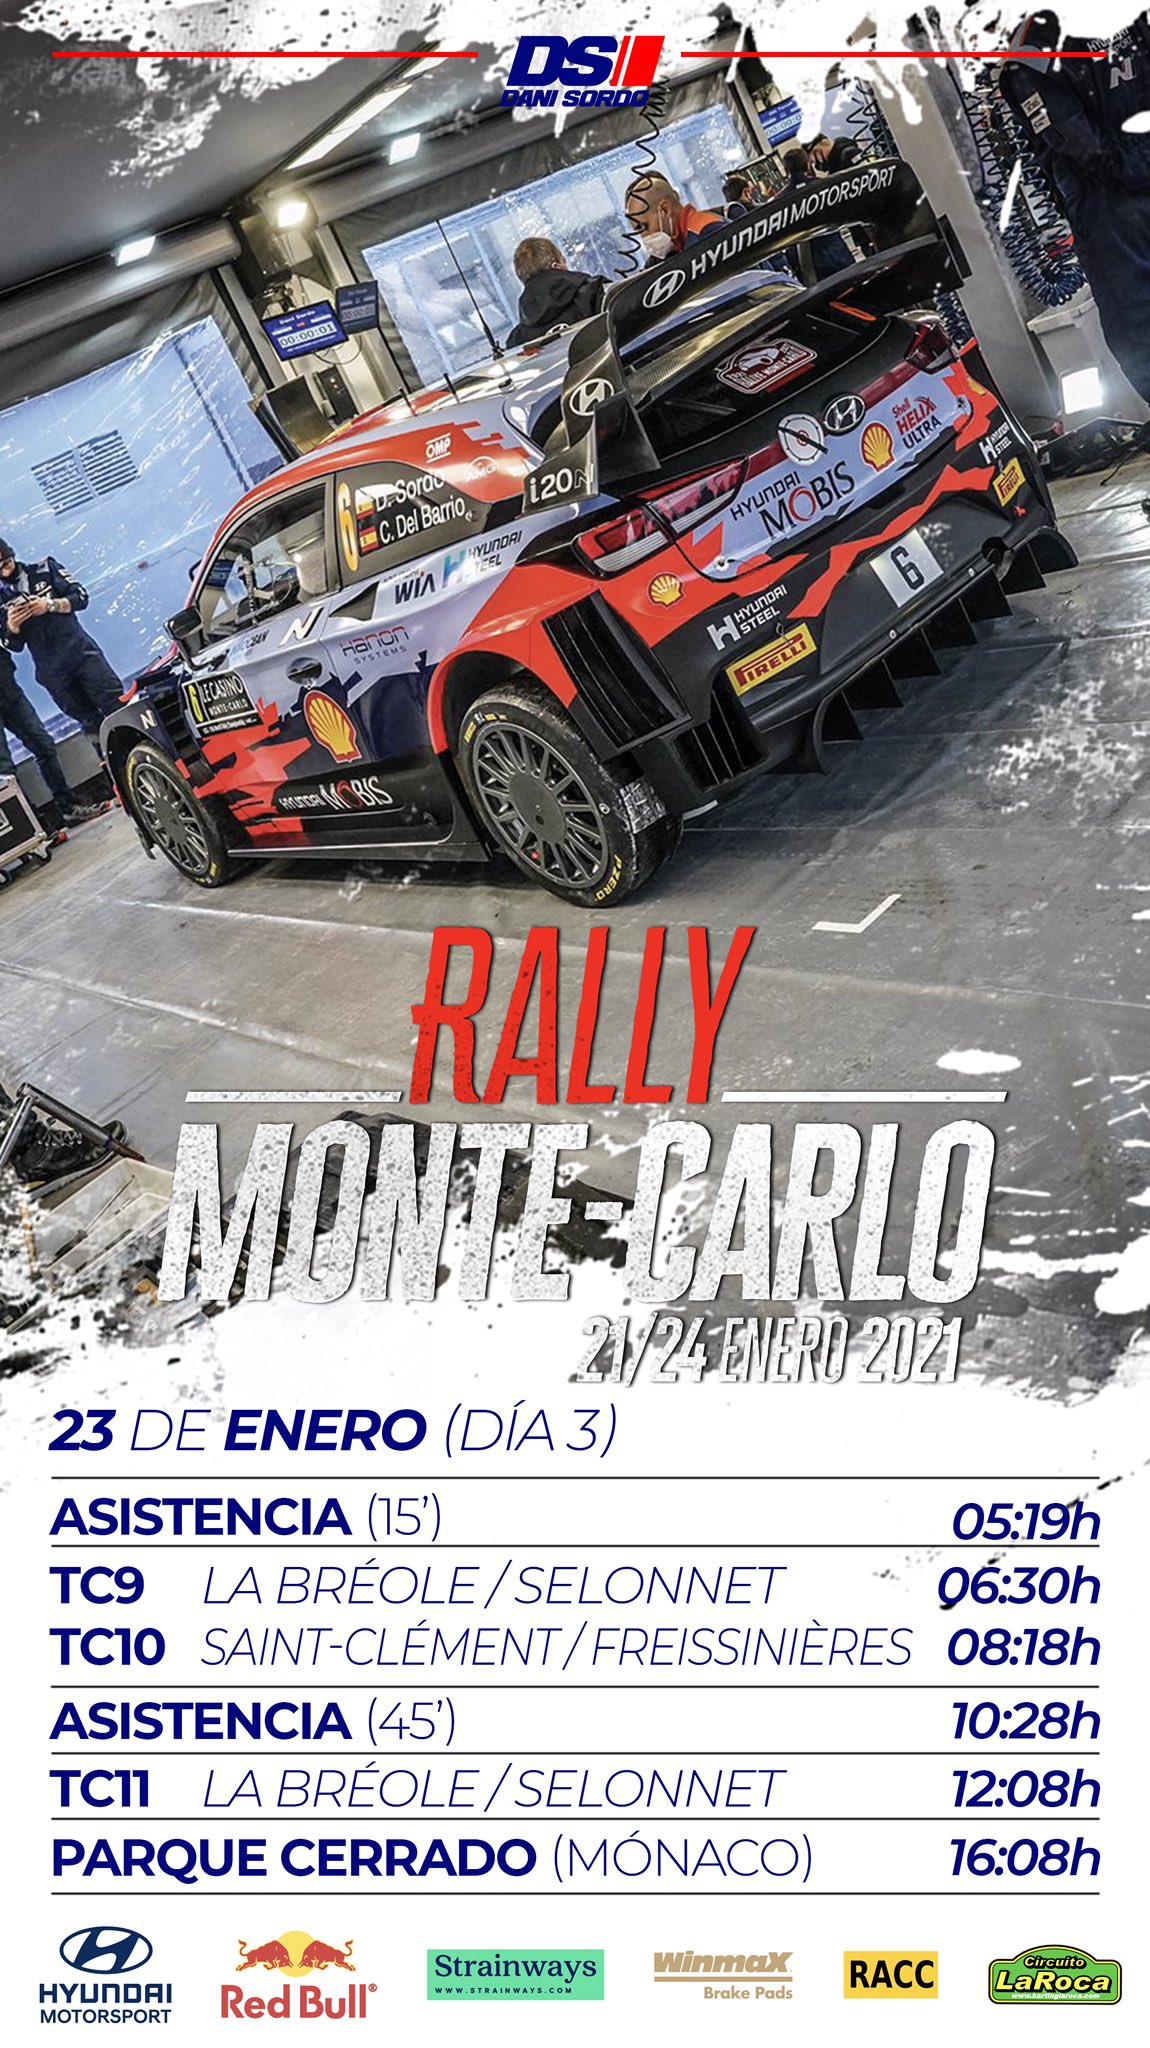 SkodaFabiaRally2Evo - WRC: 89º Rallye Automobile de Monte-Carlo [18-24 Enero] - Página 9 EsY-9MMXMAYHysf?format=jpg&name=large